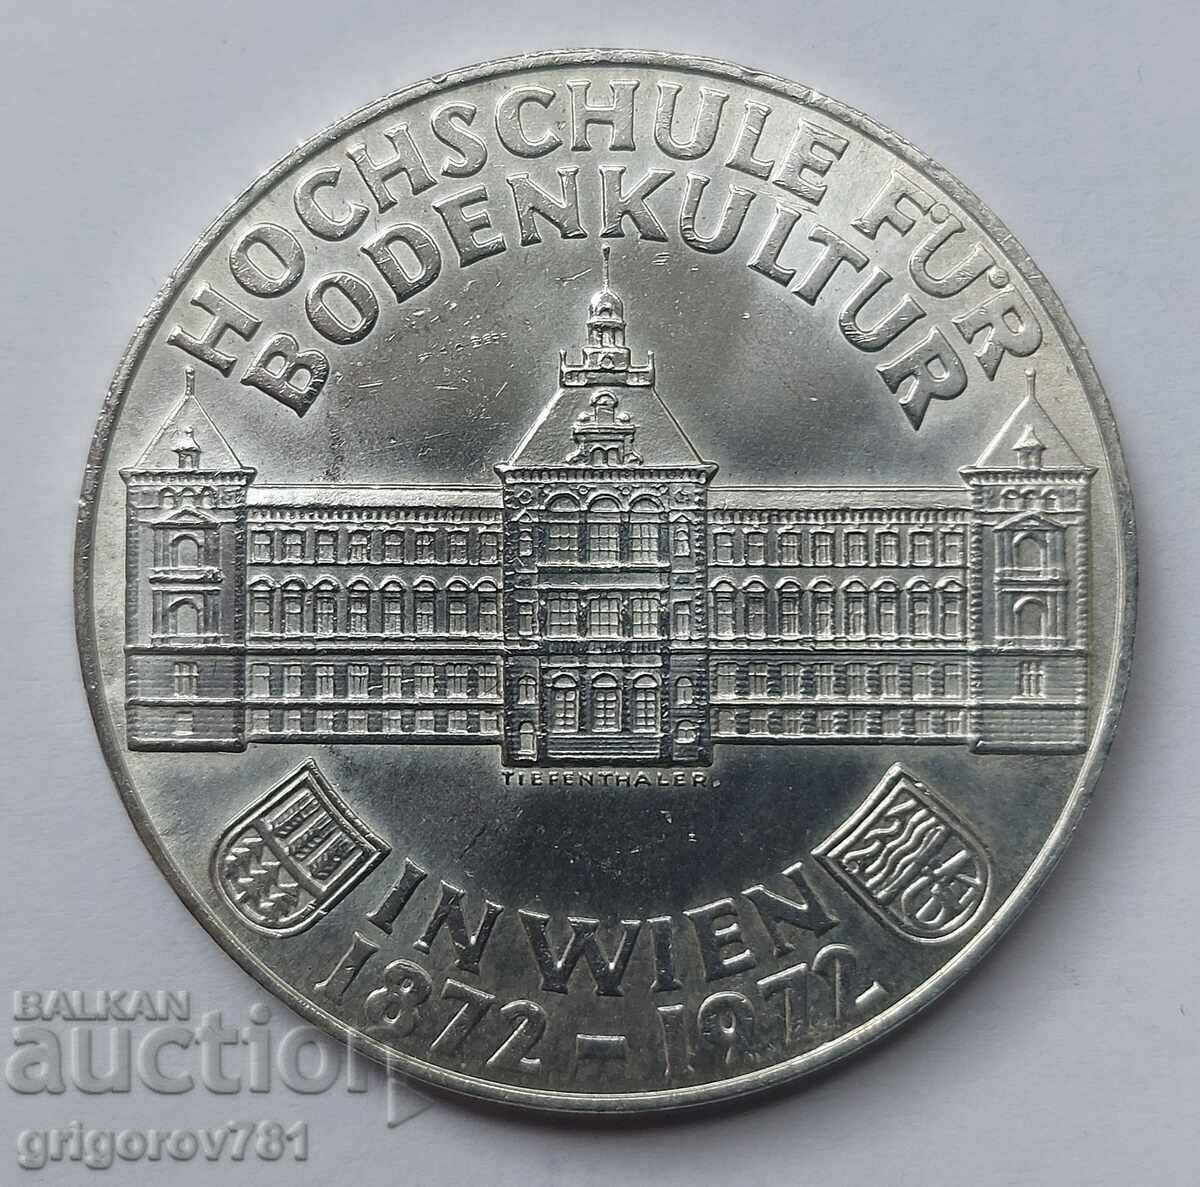 50 Shilling Silver Austria 1972 - Silver Coin #3